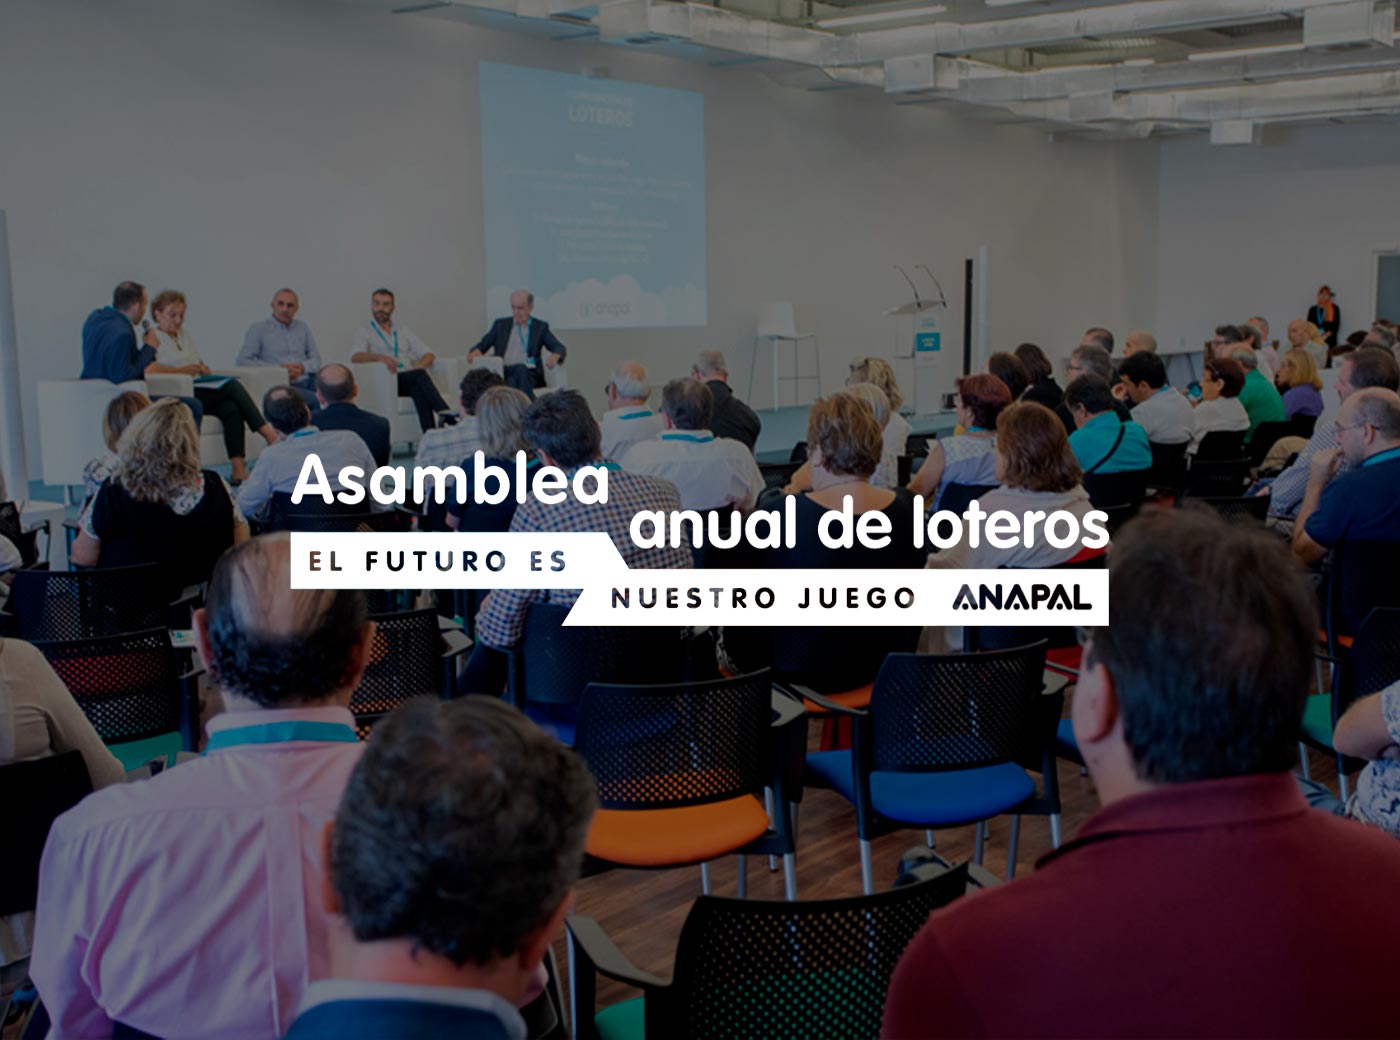 img destacada asemblea de loteros - inova3 - Marketing digital desde ourense